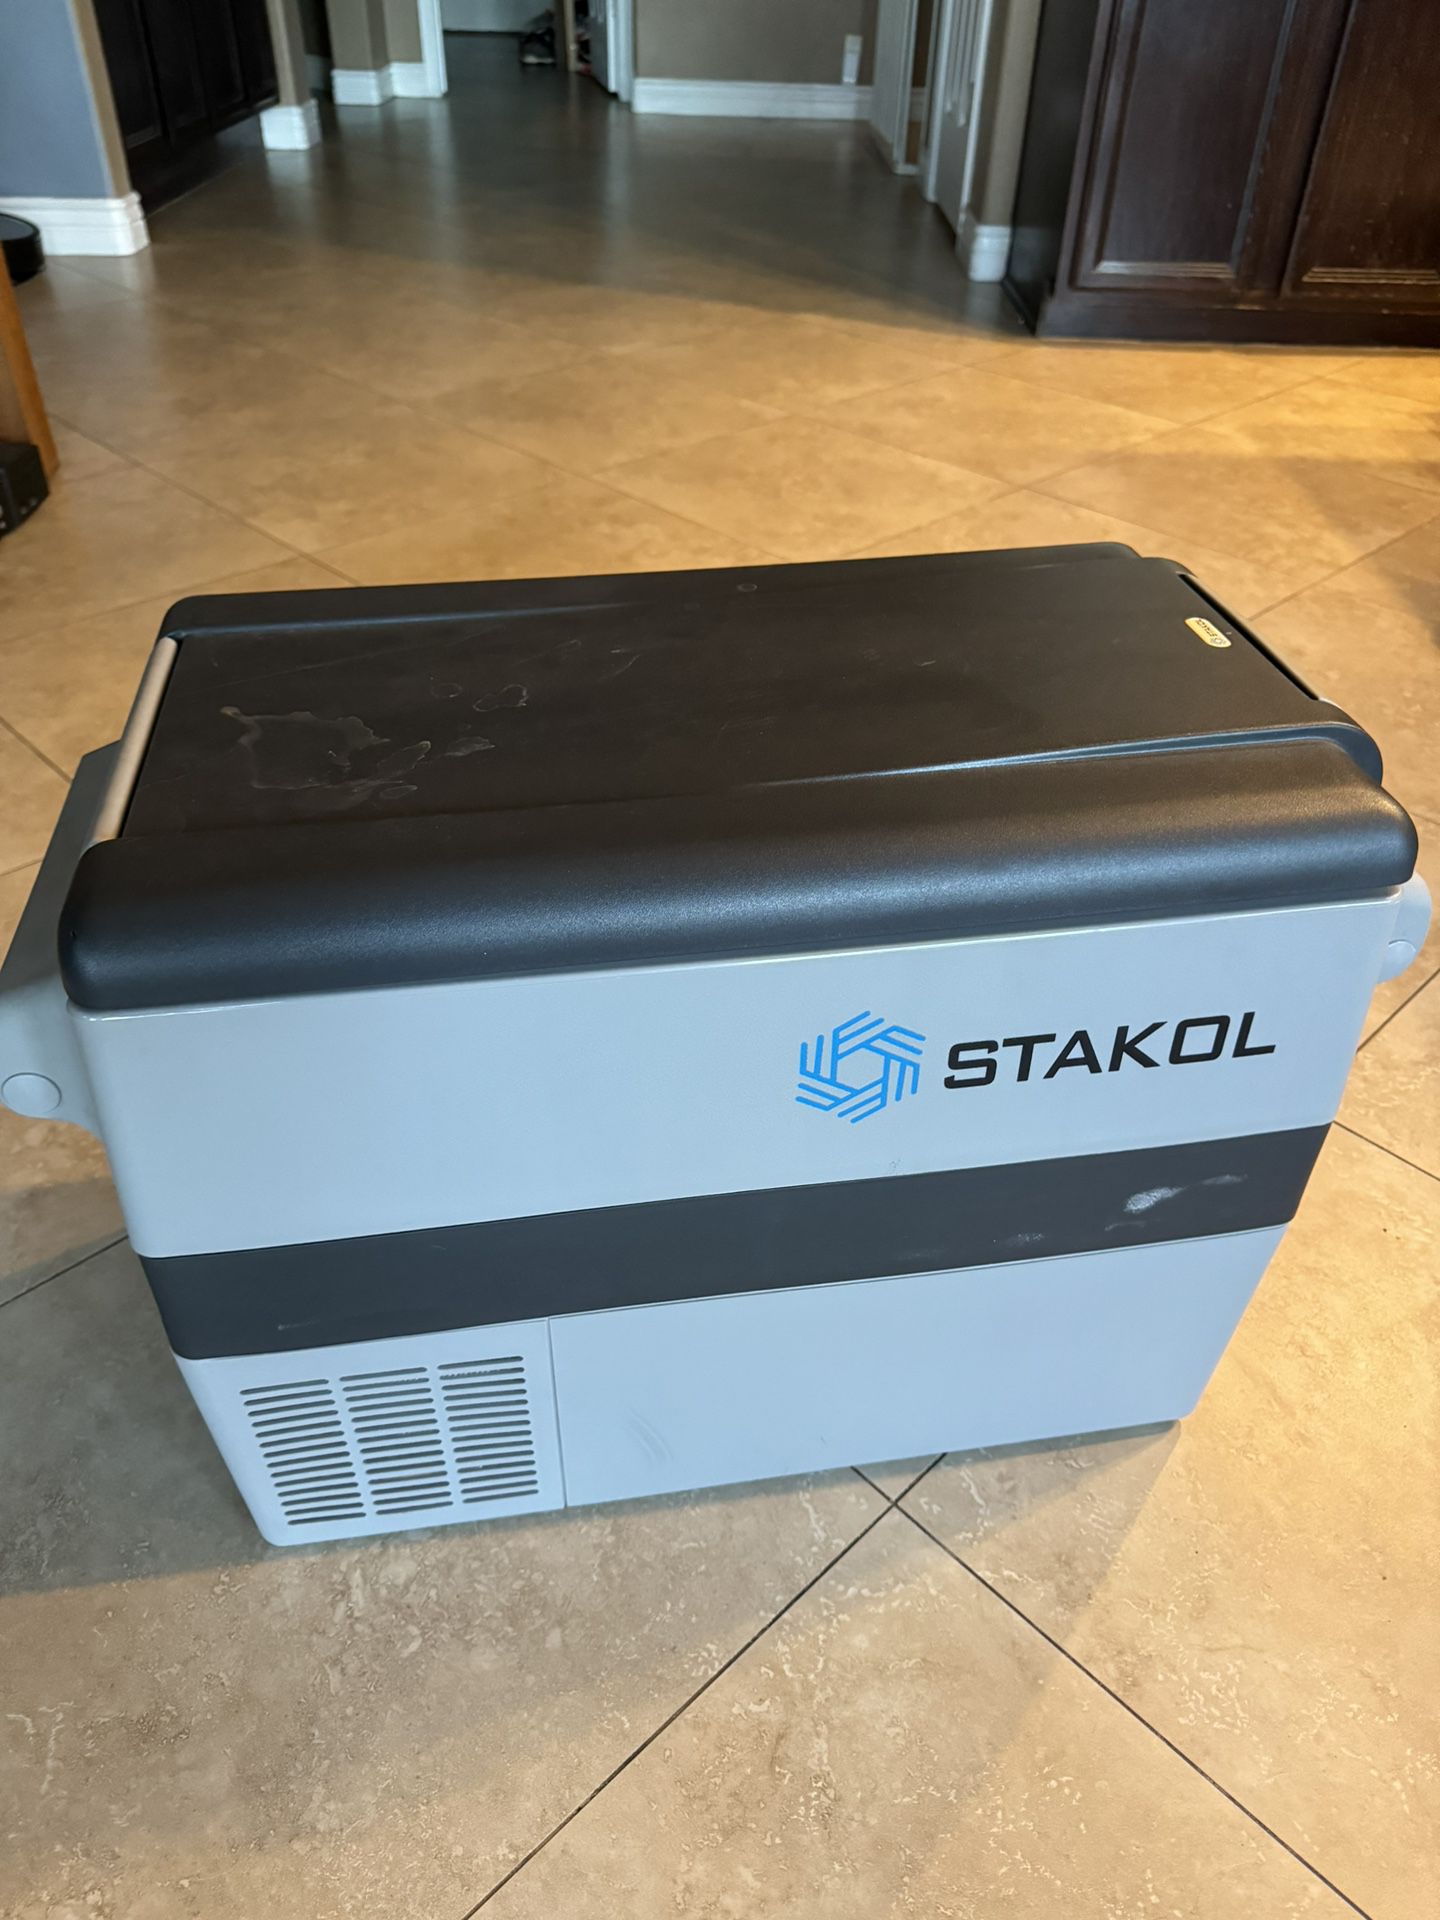 STAKOL 44 Quarts Portable Electric Car Cooler Refrigerator/Freezer Compressor